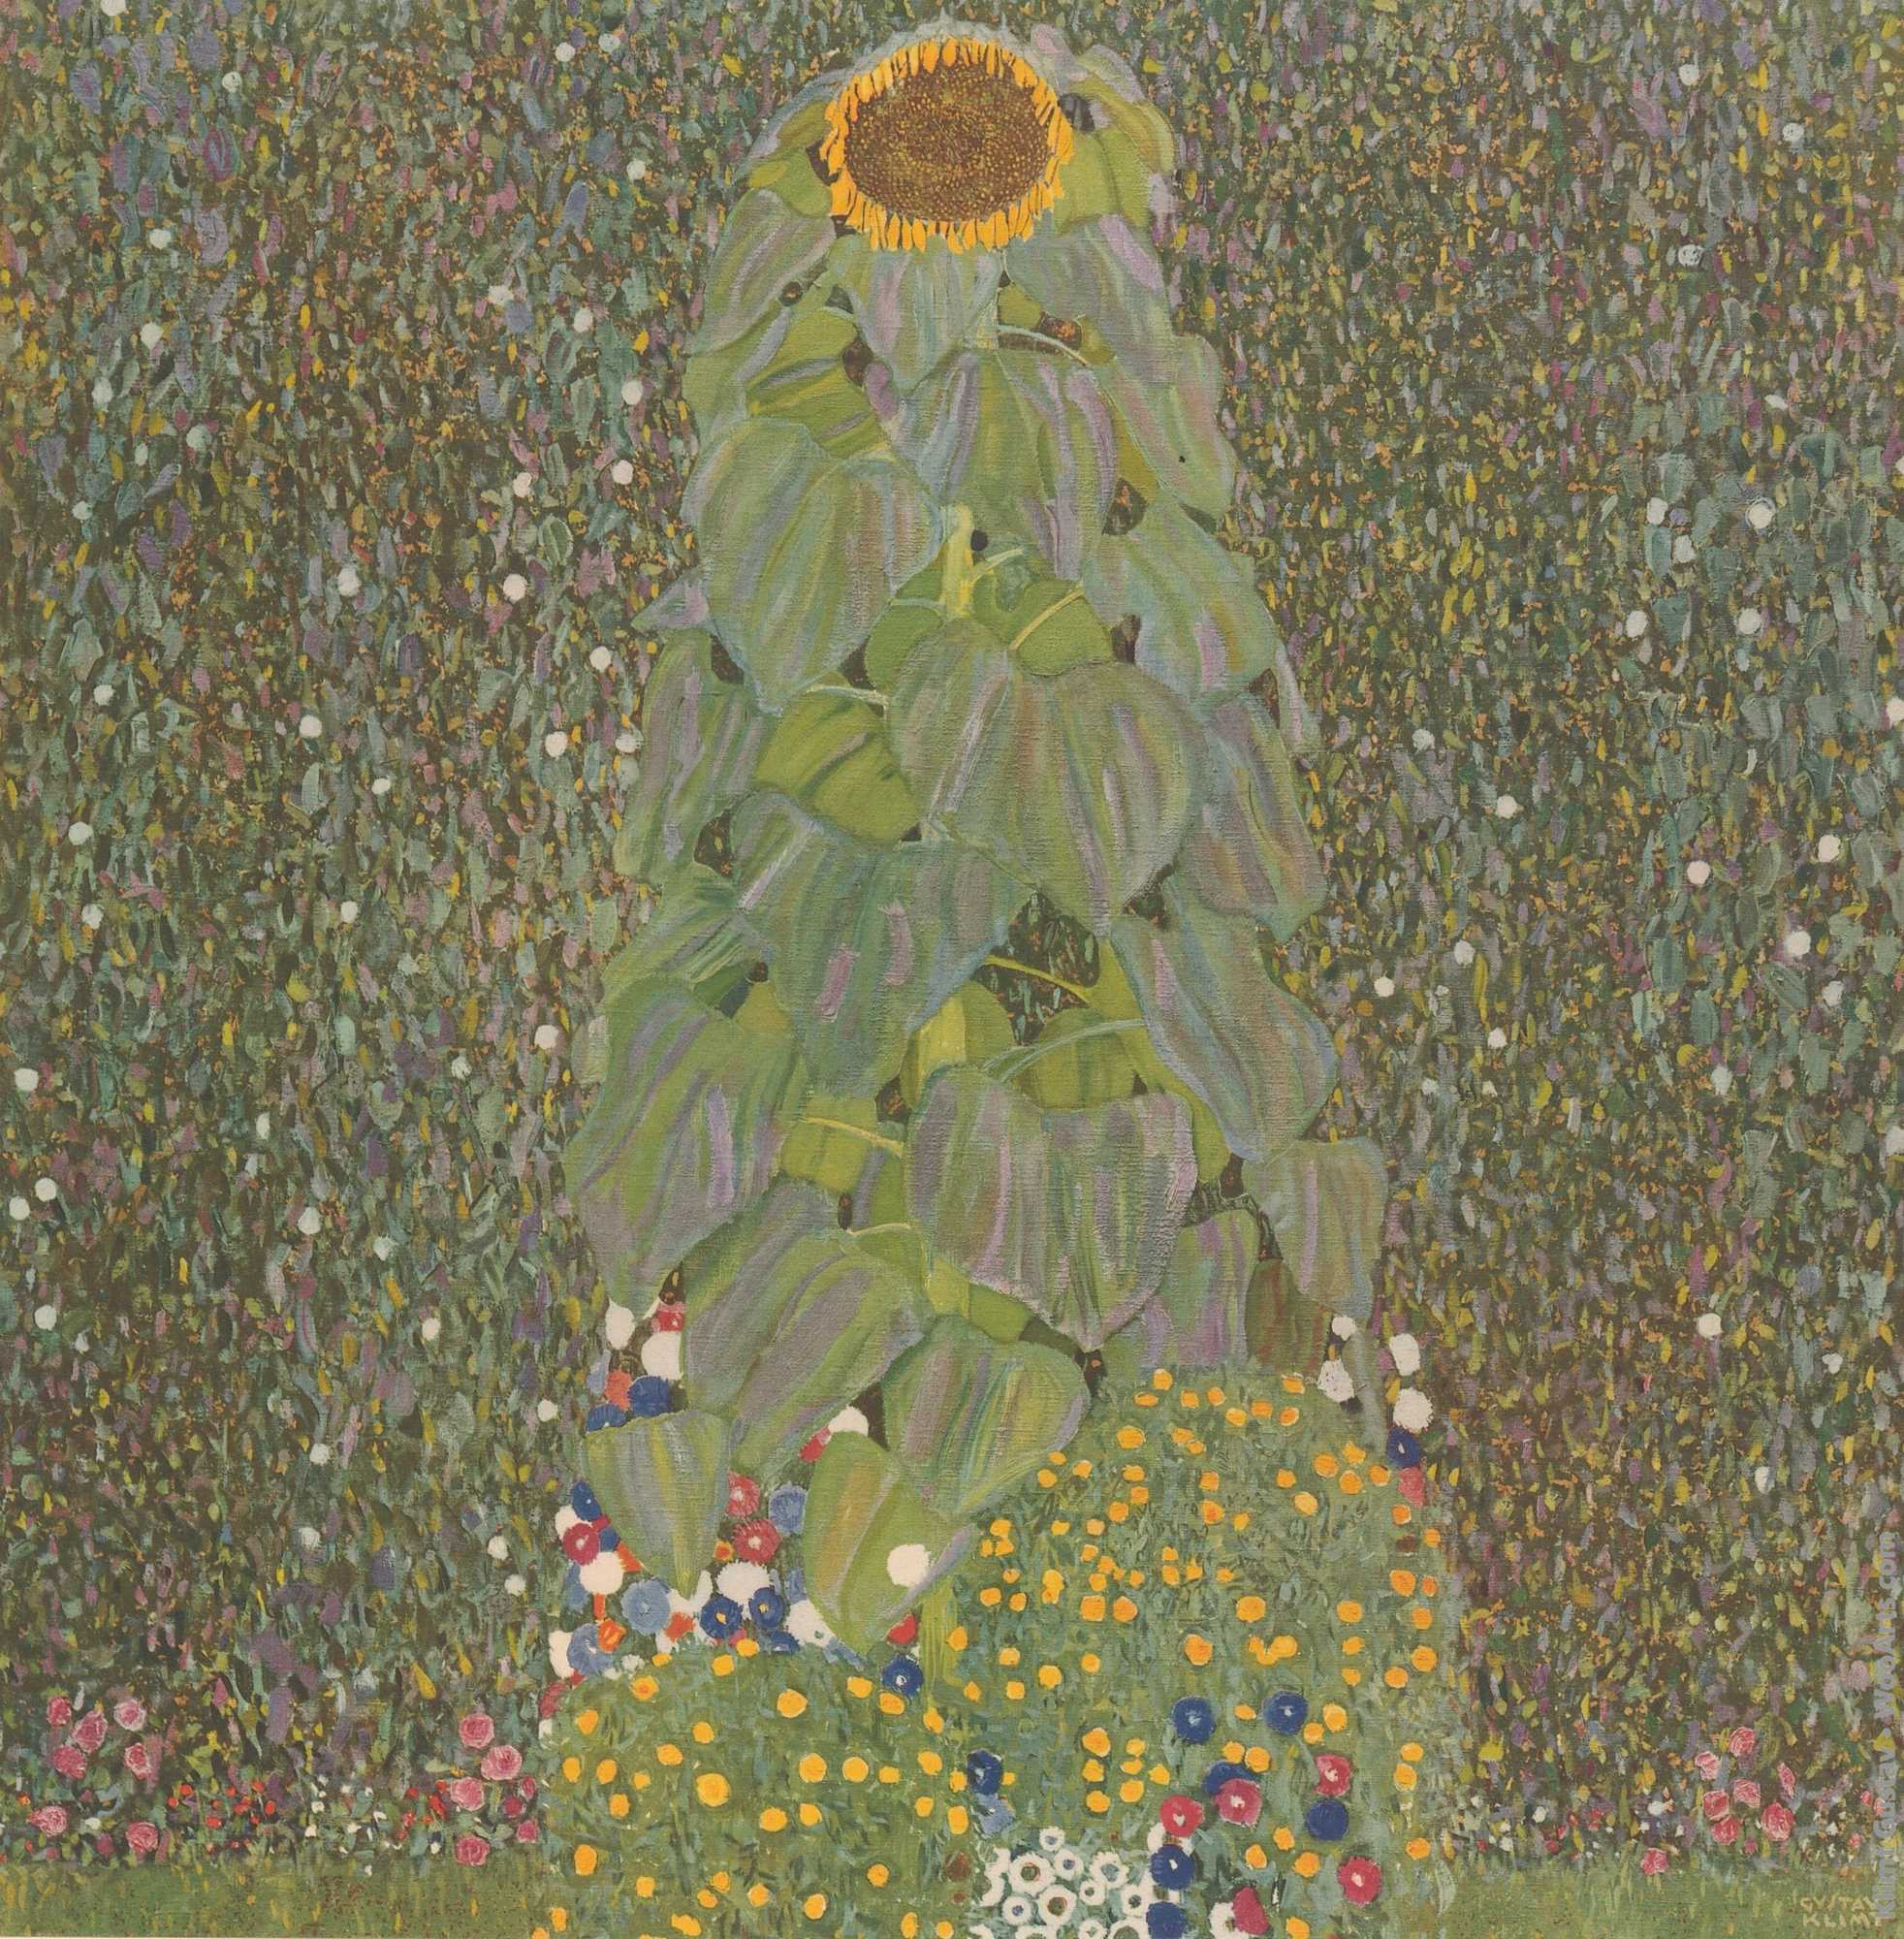 Sunflower after Gustav Klimt, plate 30, The work of Gustav Klimt Gustav Klimt 1918